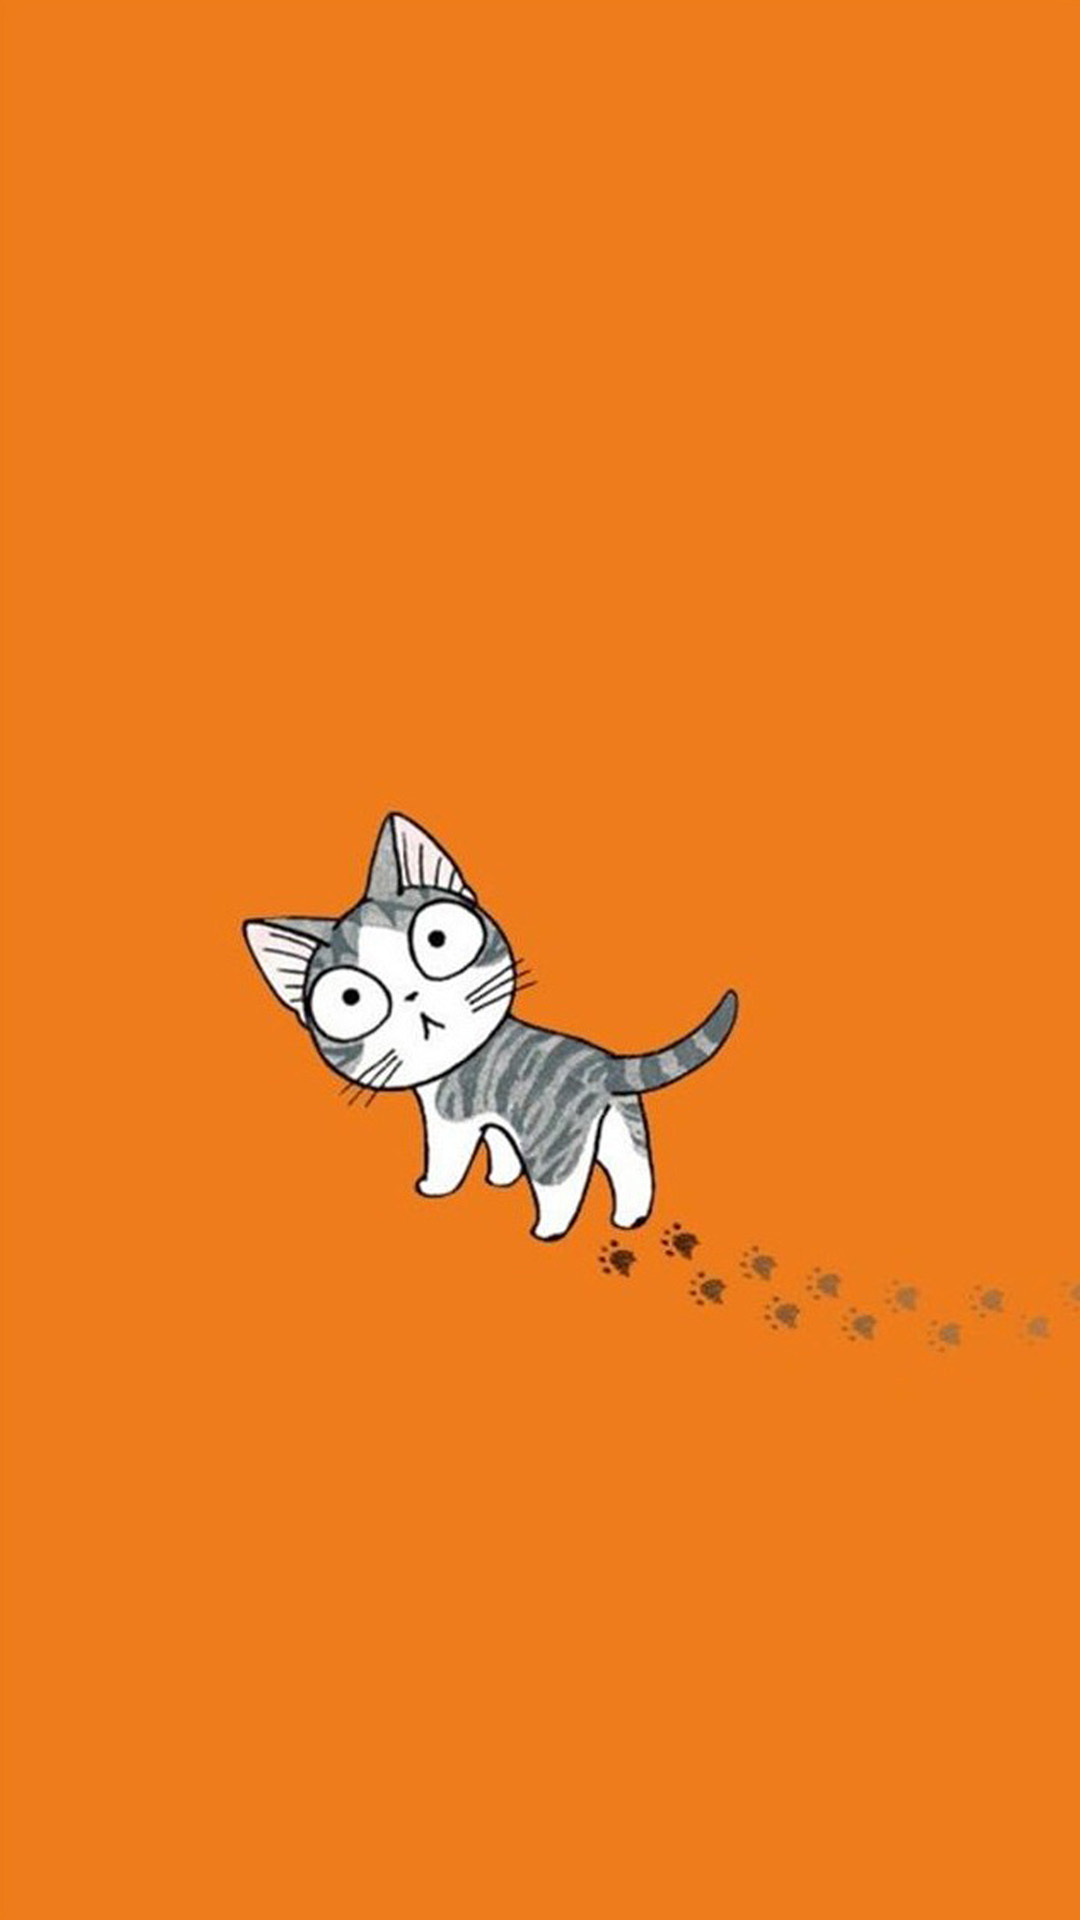 75+] Cartoon Cat Wallpaper - WallpaperSafari